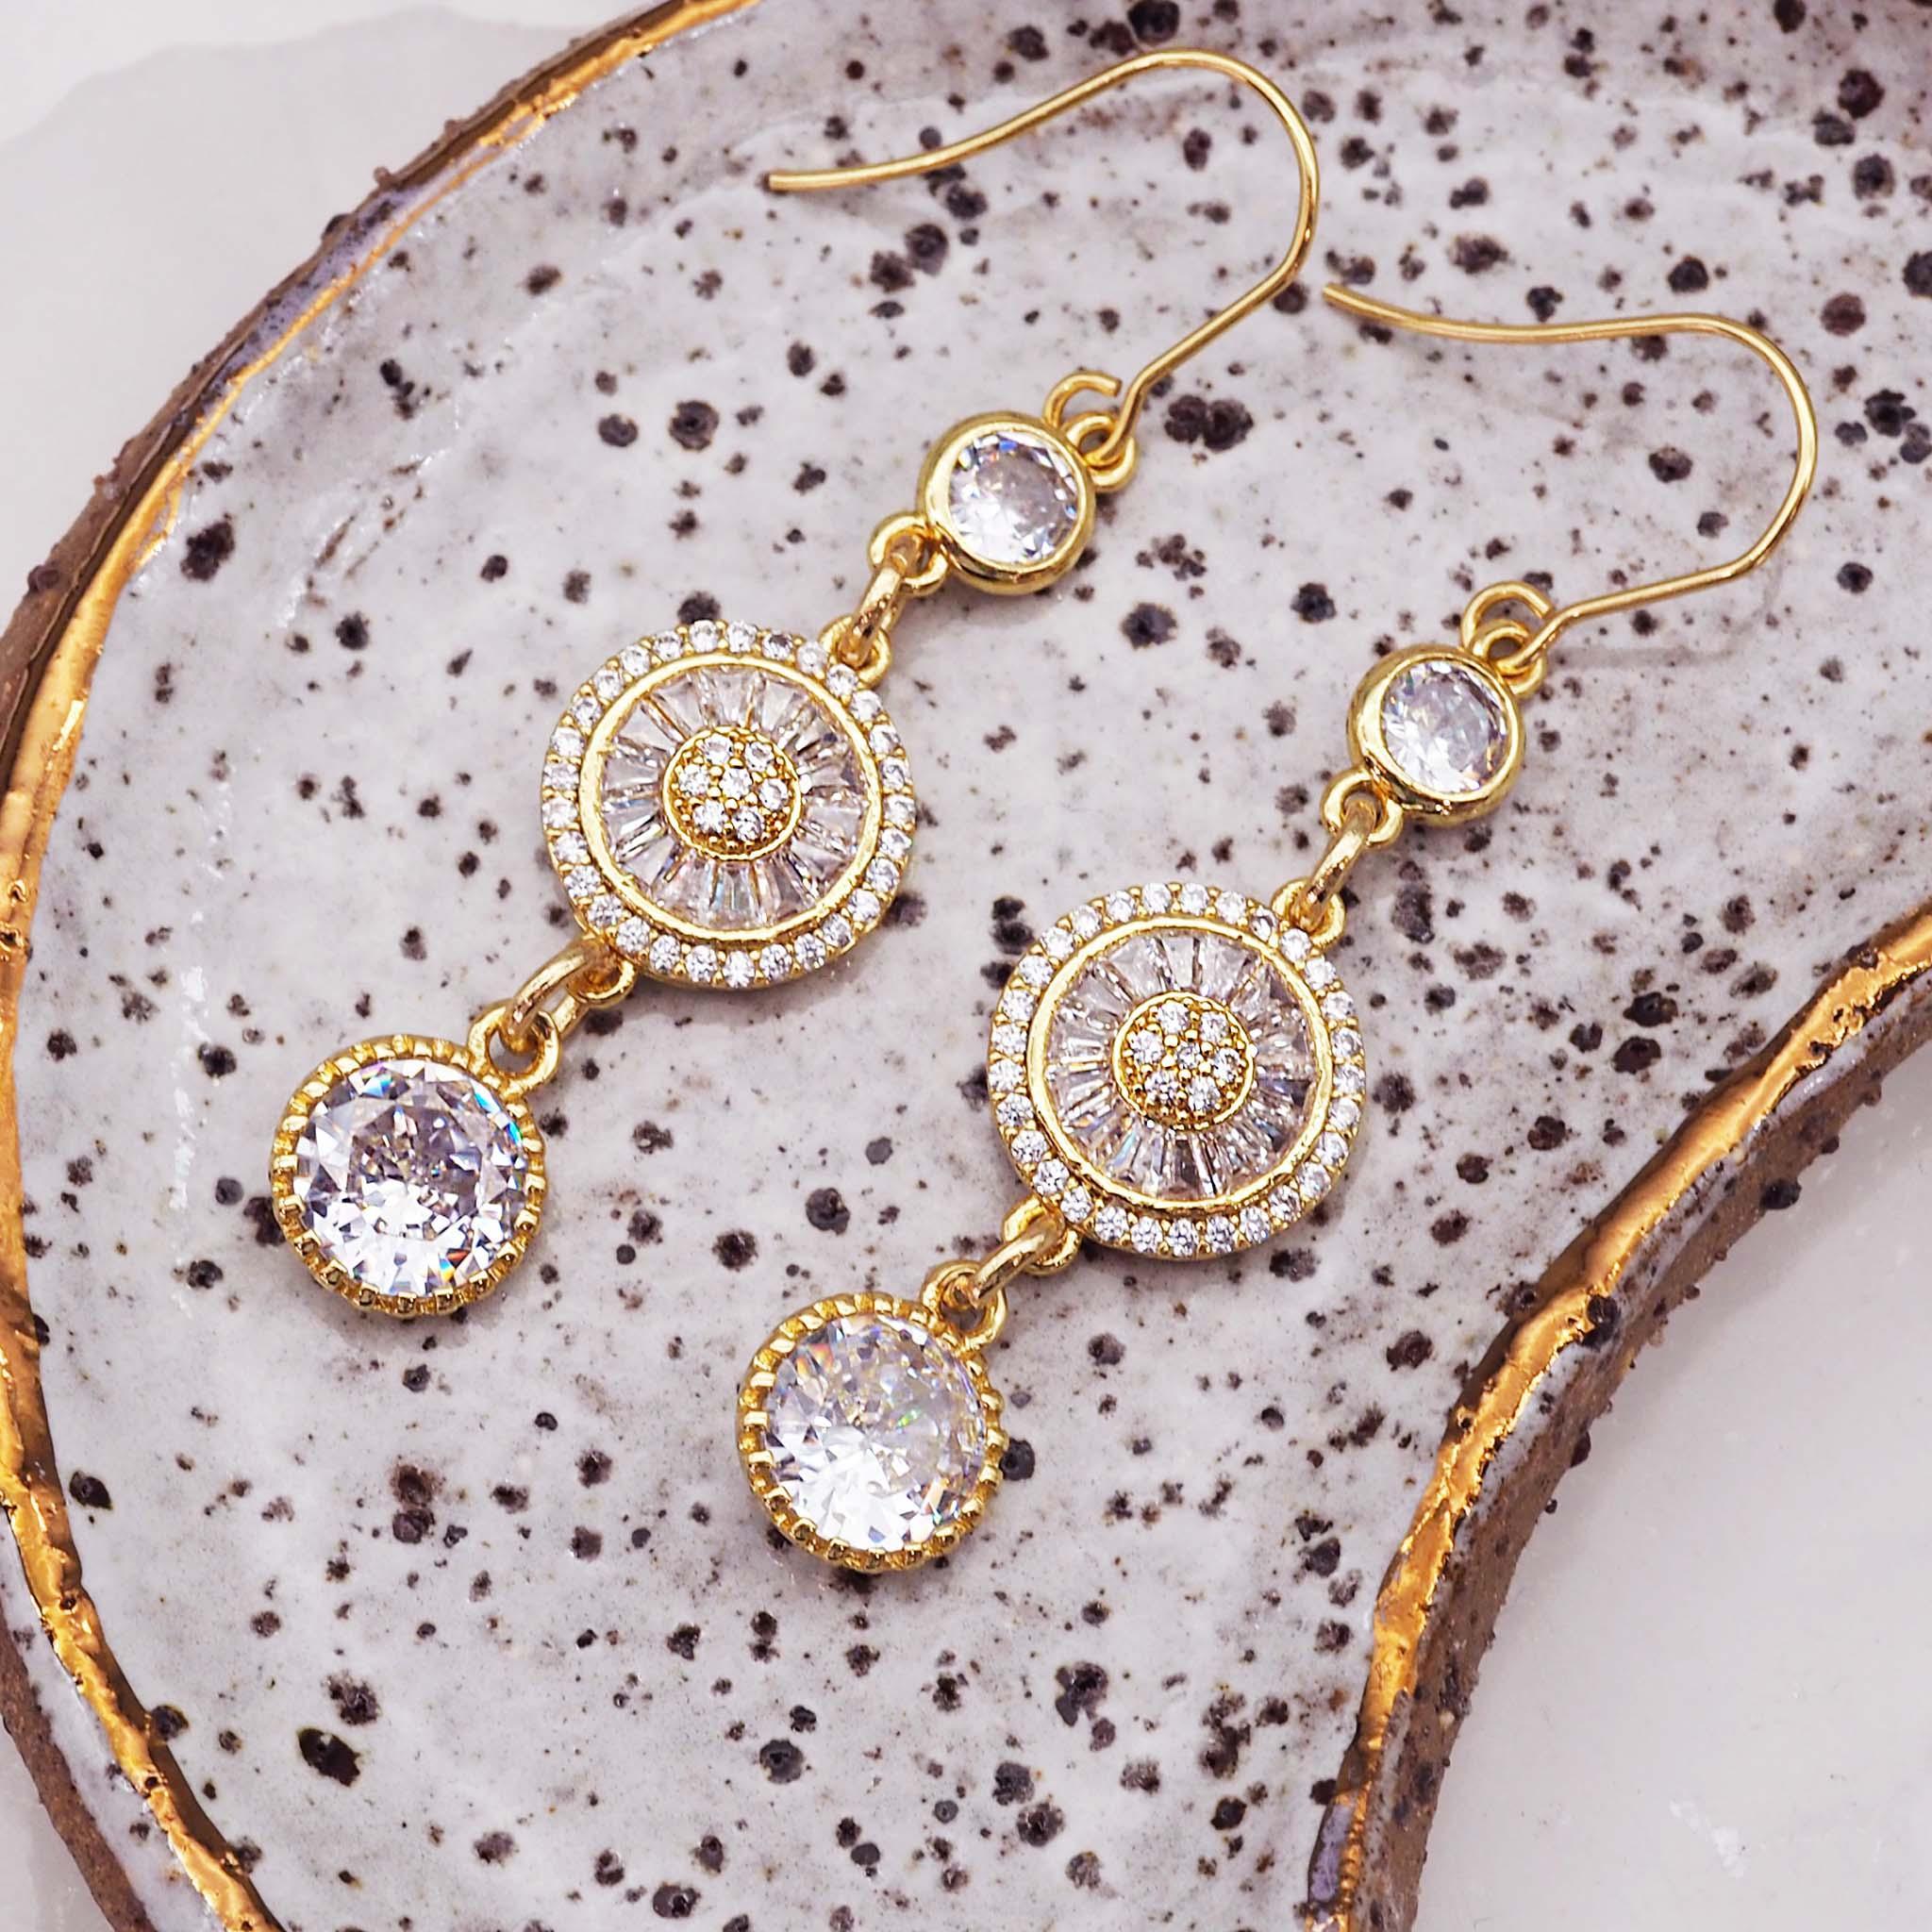 Golden Luxe Earrings - women's jewellery by indie and harper